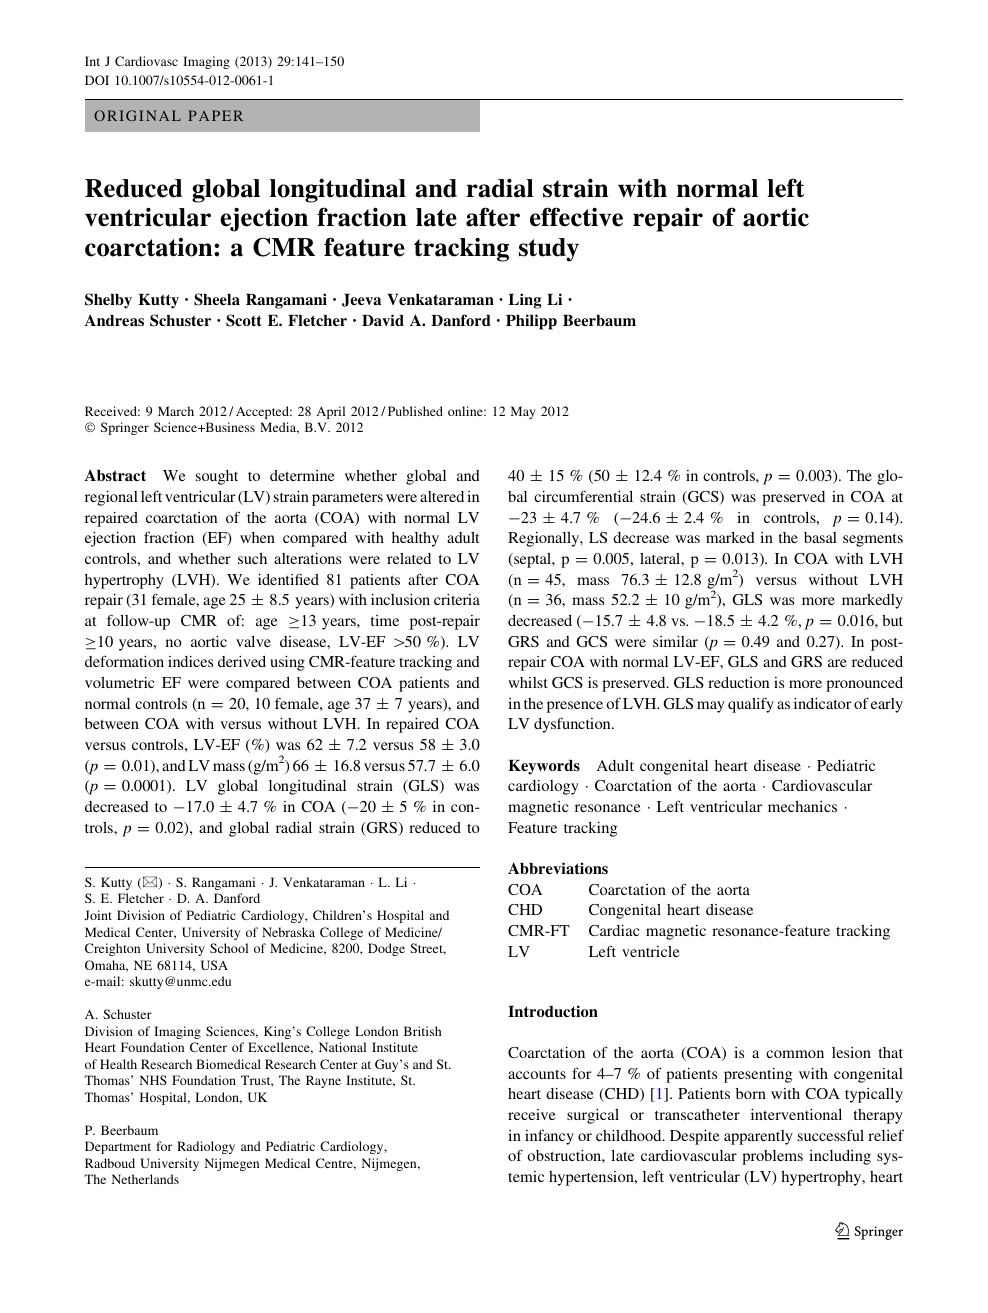 PDF] Prognostic value of global longitudinal strain in patients